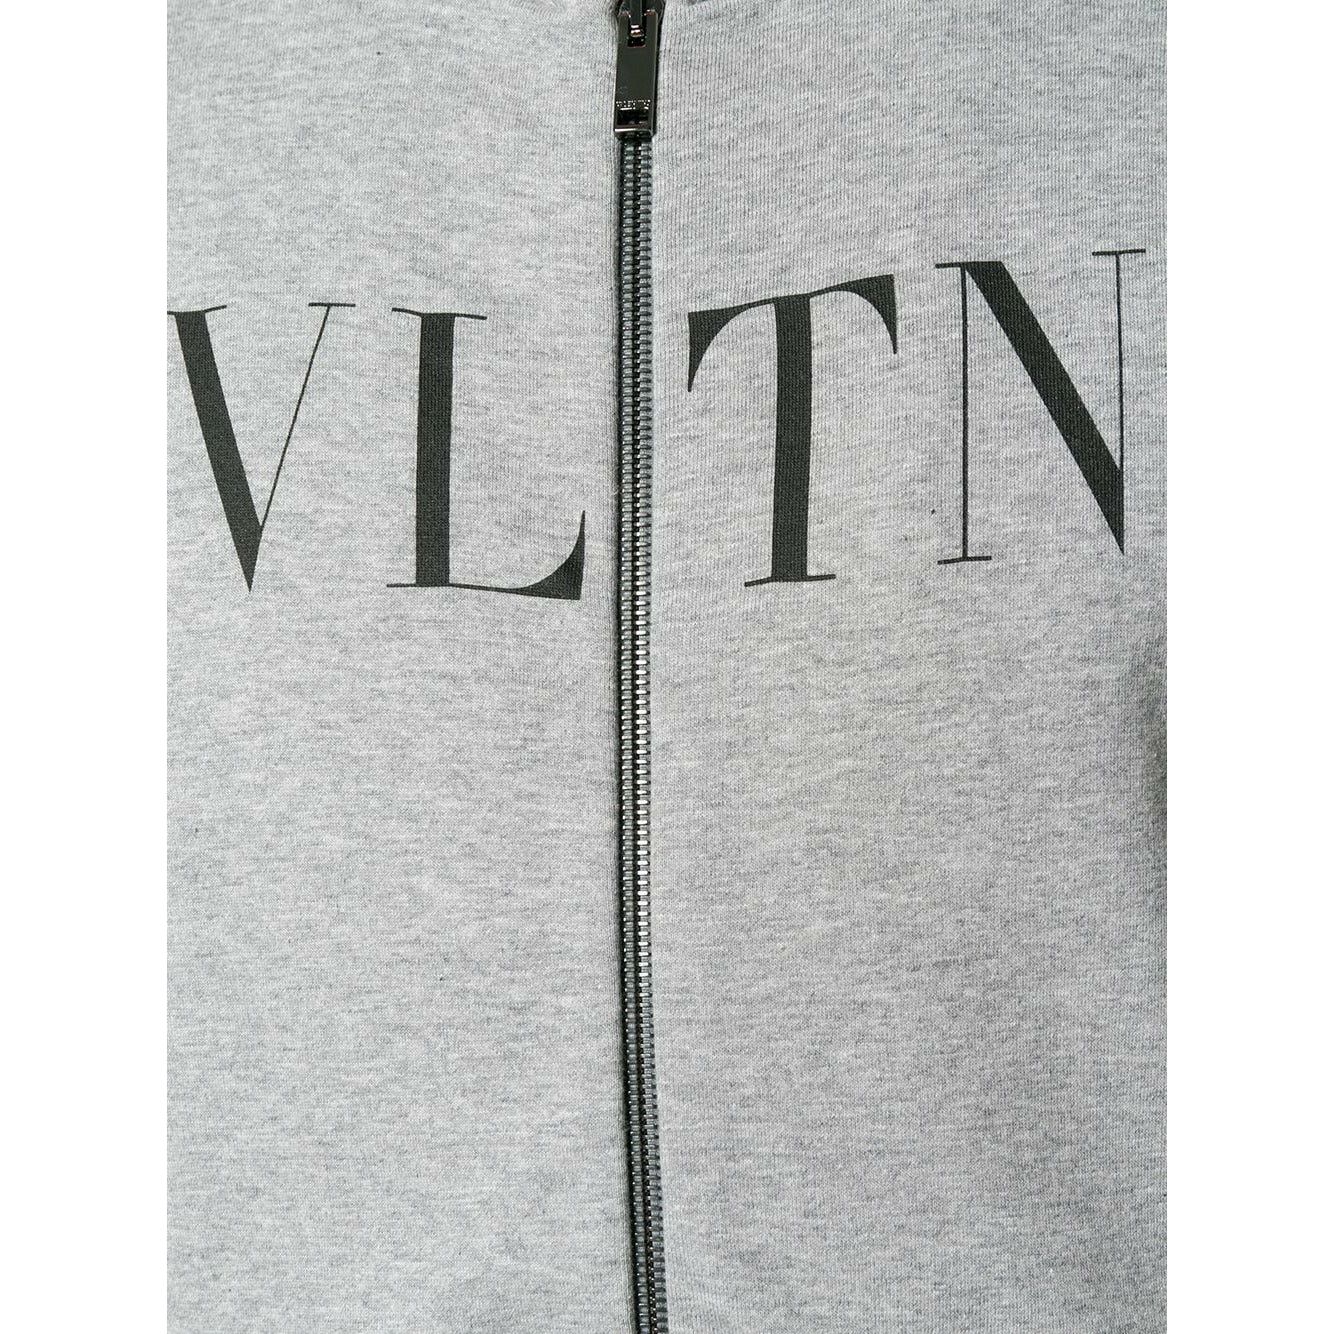 VALENTINO GARAVANI VLTN hoodie size XS (fits S too)